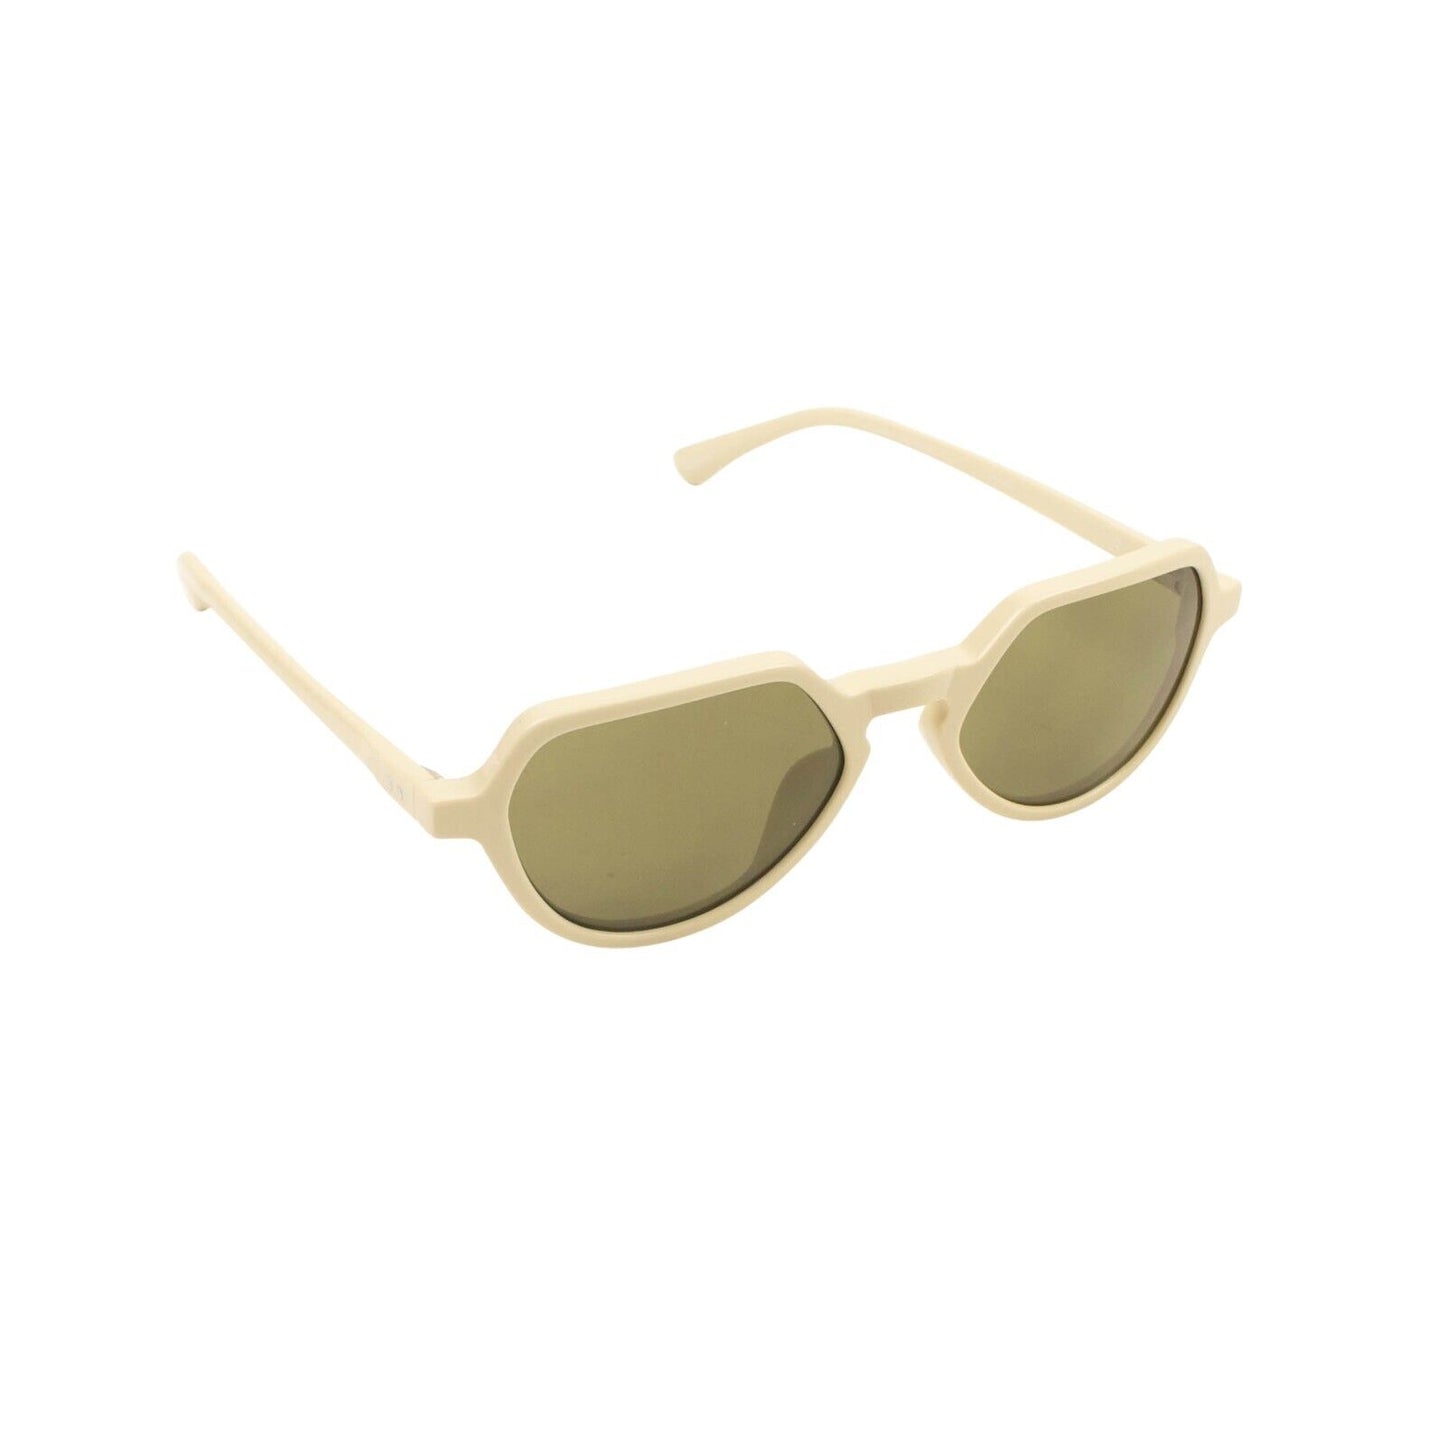 Dries Van Noten X Linda Farrow Vintage Sunglasses - Ivory/Khaki